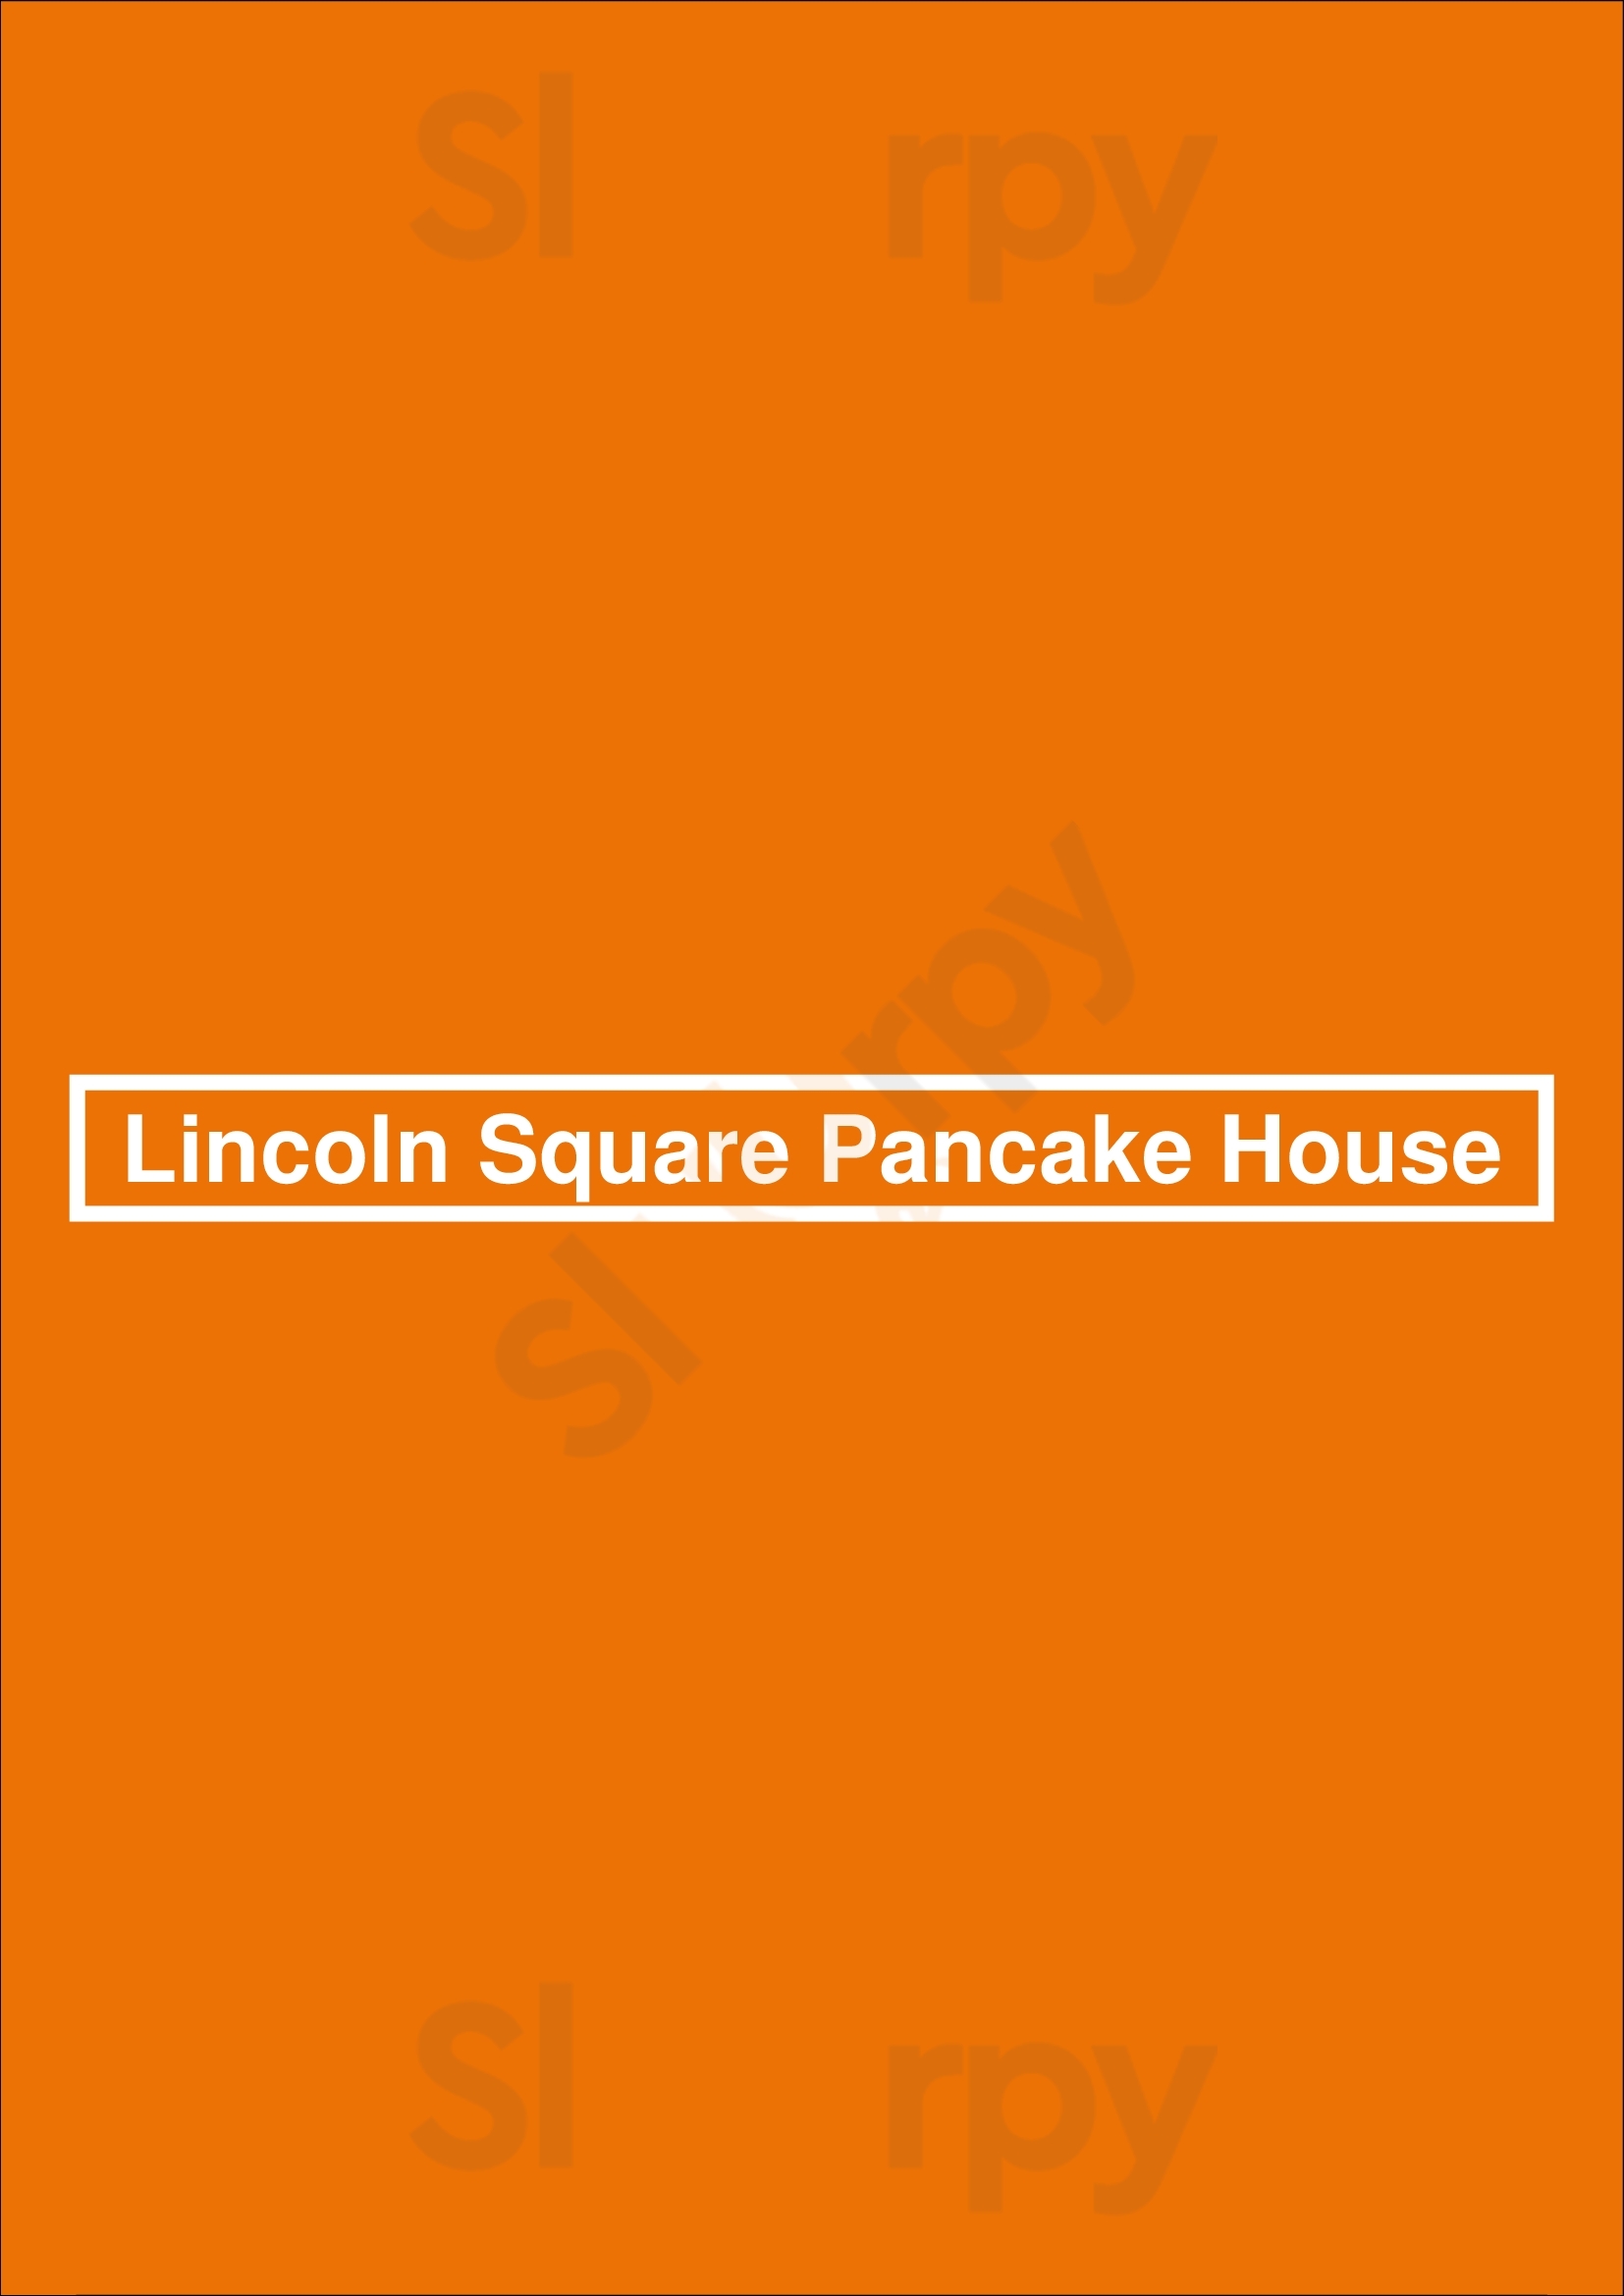 Lincoln Square Pancake House Indianapolis Menu - 1